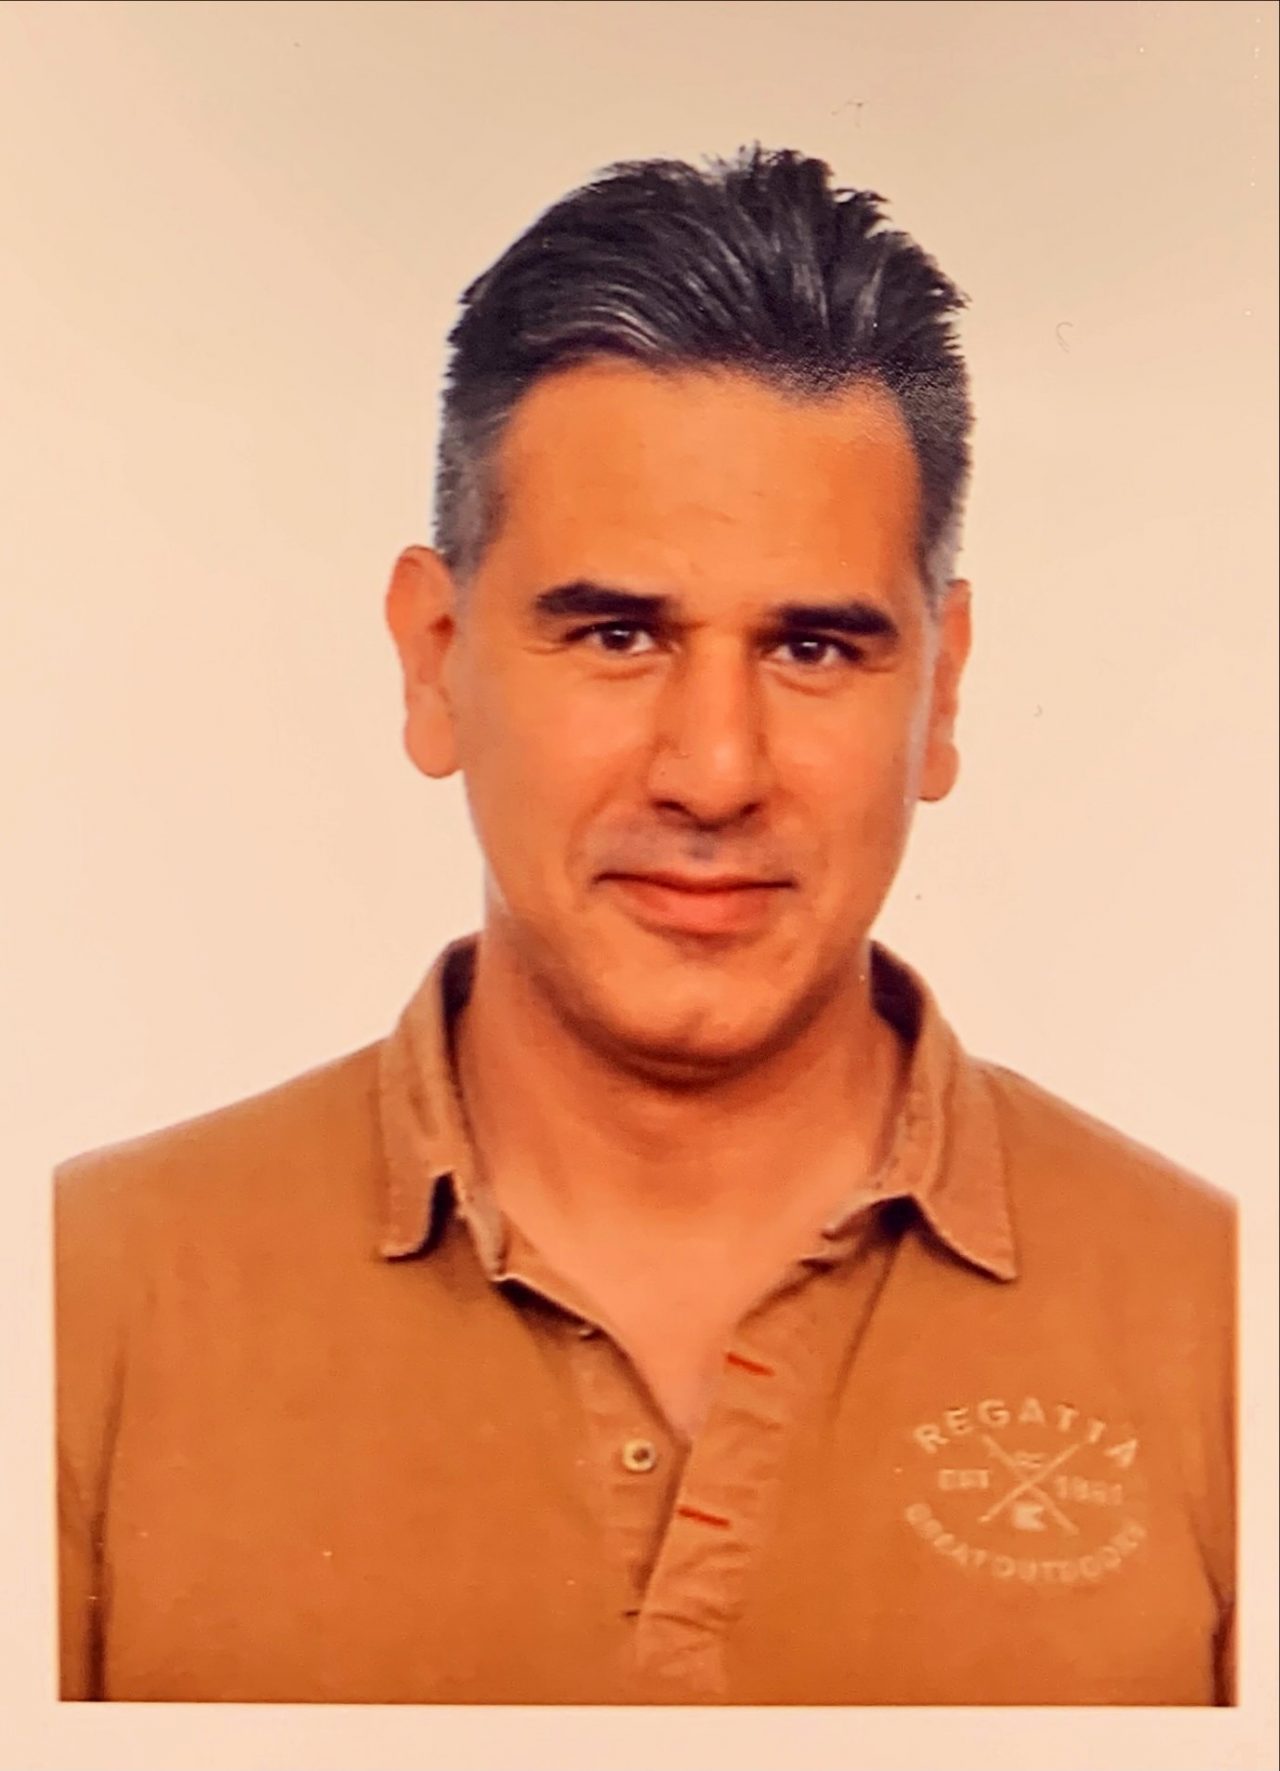 Dr. Carlos Boucher